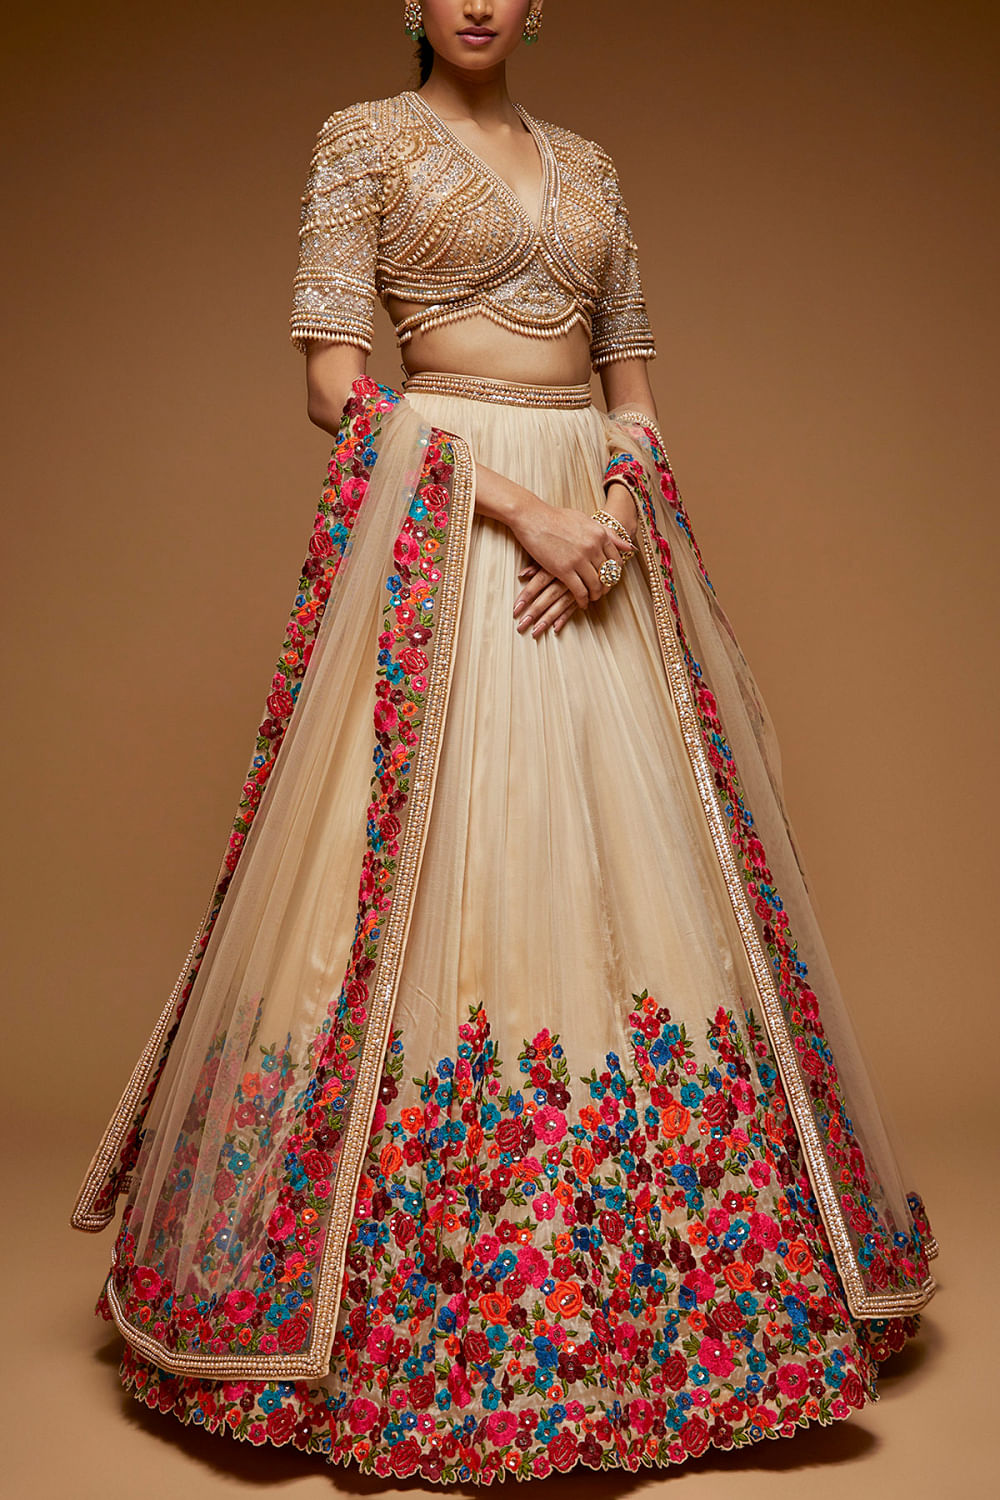 Fashion Designer Neeta Lulla to Launch Affordable Wedding Wear | India.com